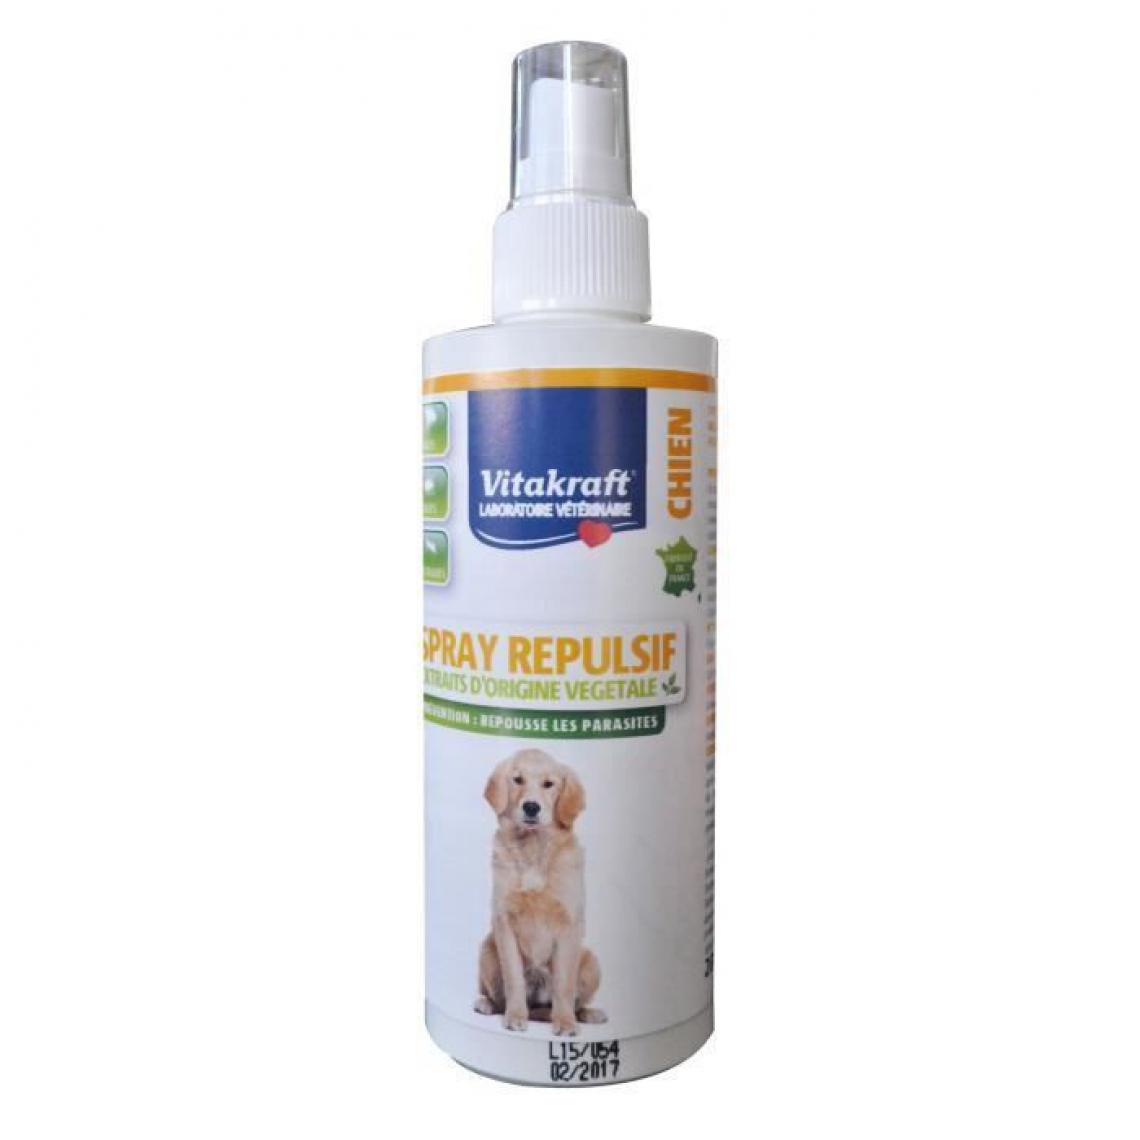 Vitakraft - VITAKRAFT Spray repulsif 200 ml - Pour Chien - Anti-parasitaire pour chien